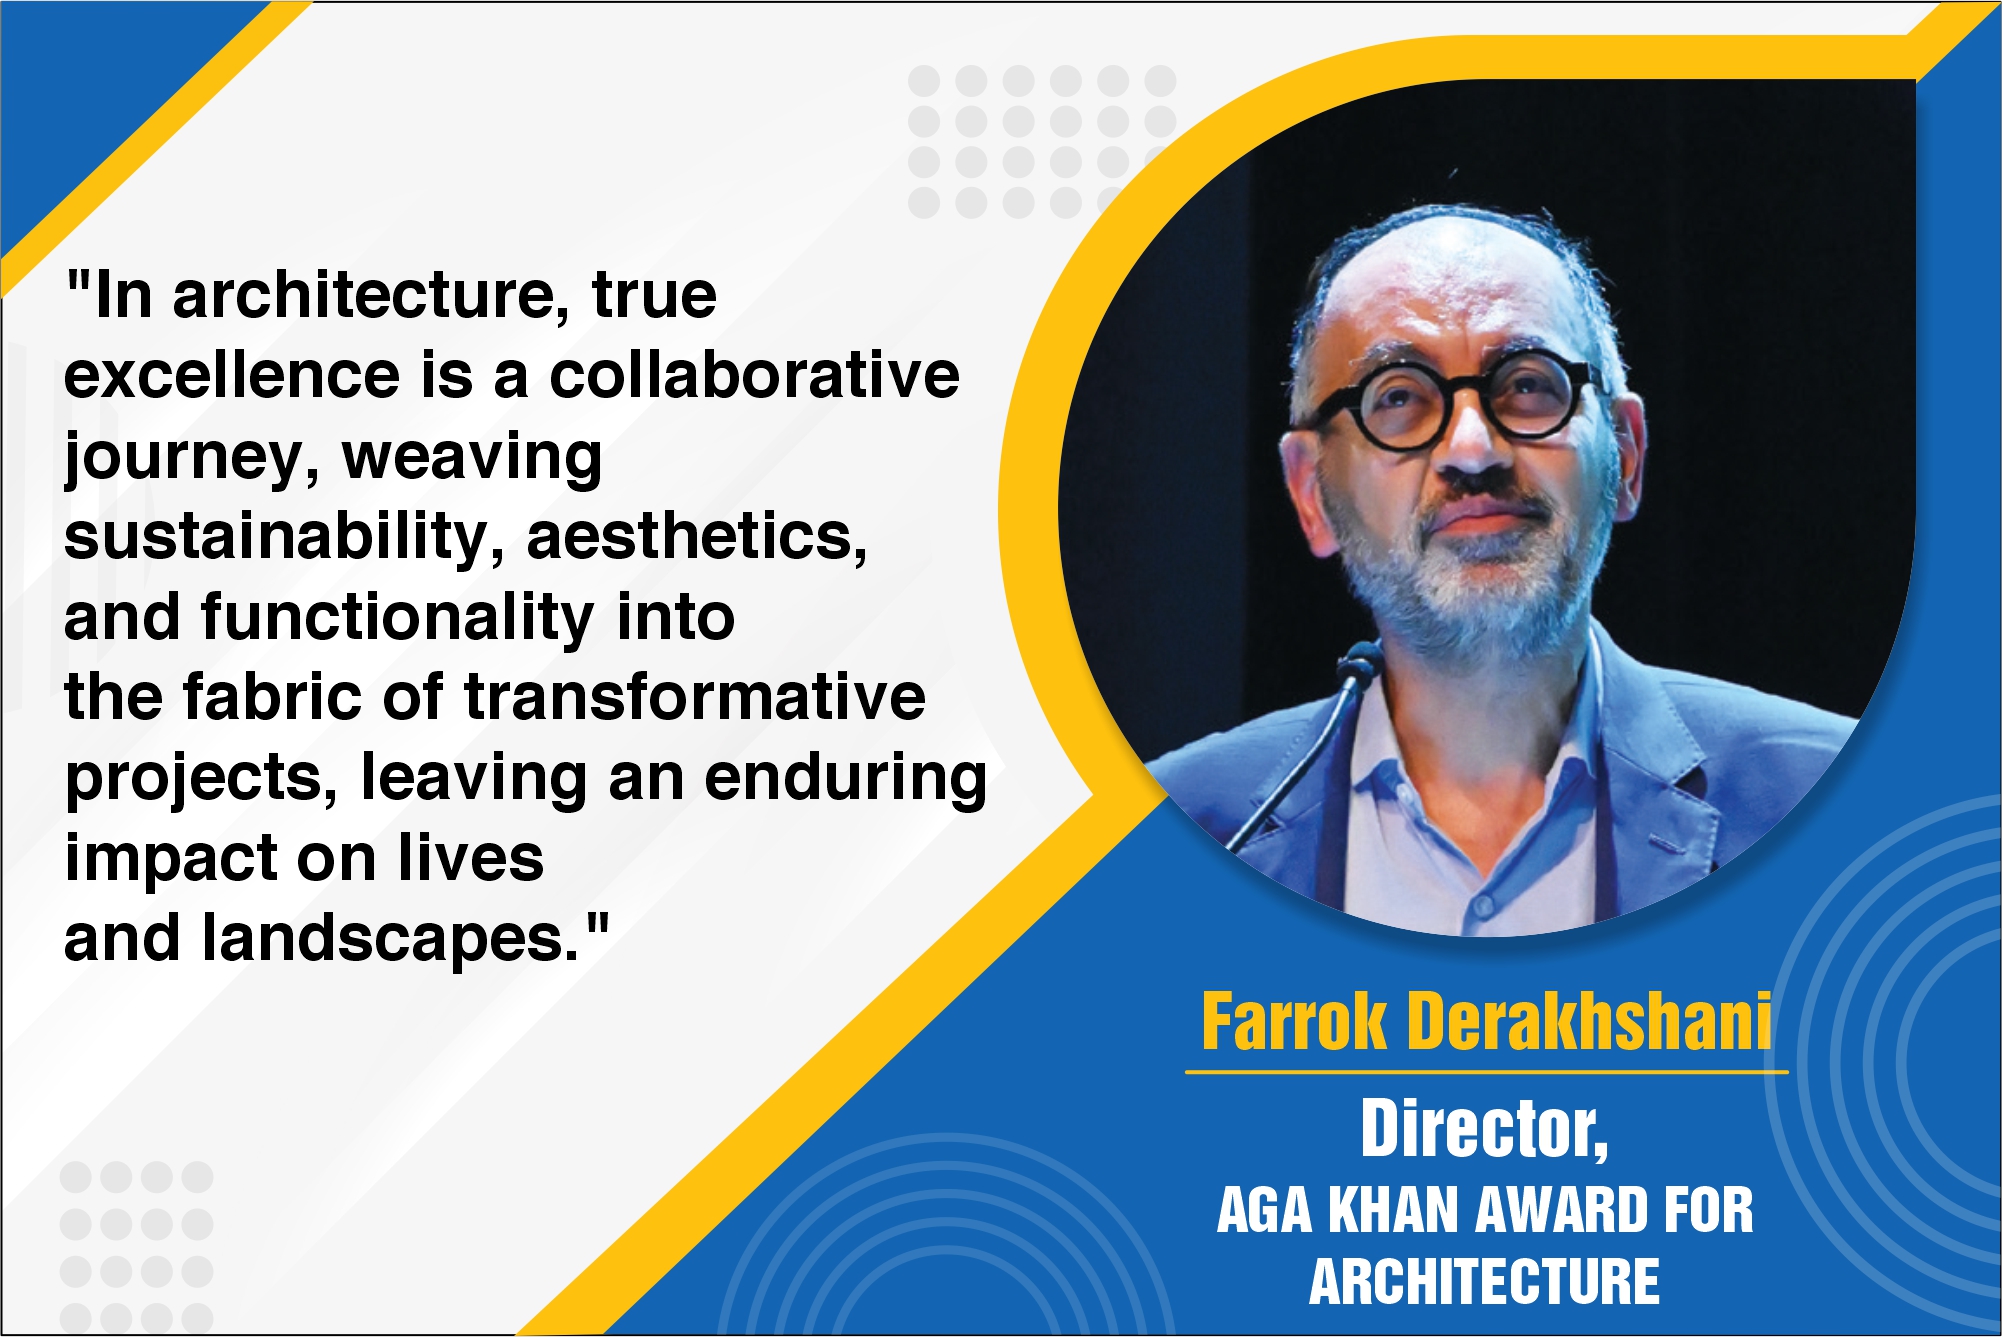  Aga Khan Award for Architecture